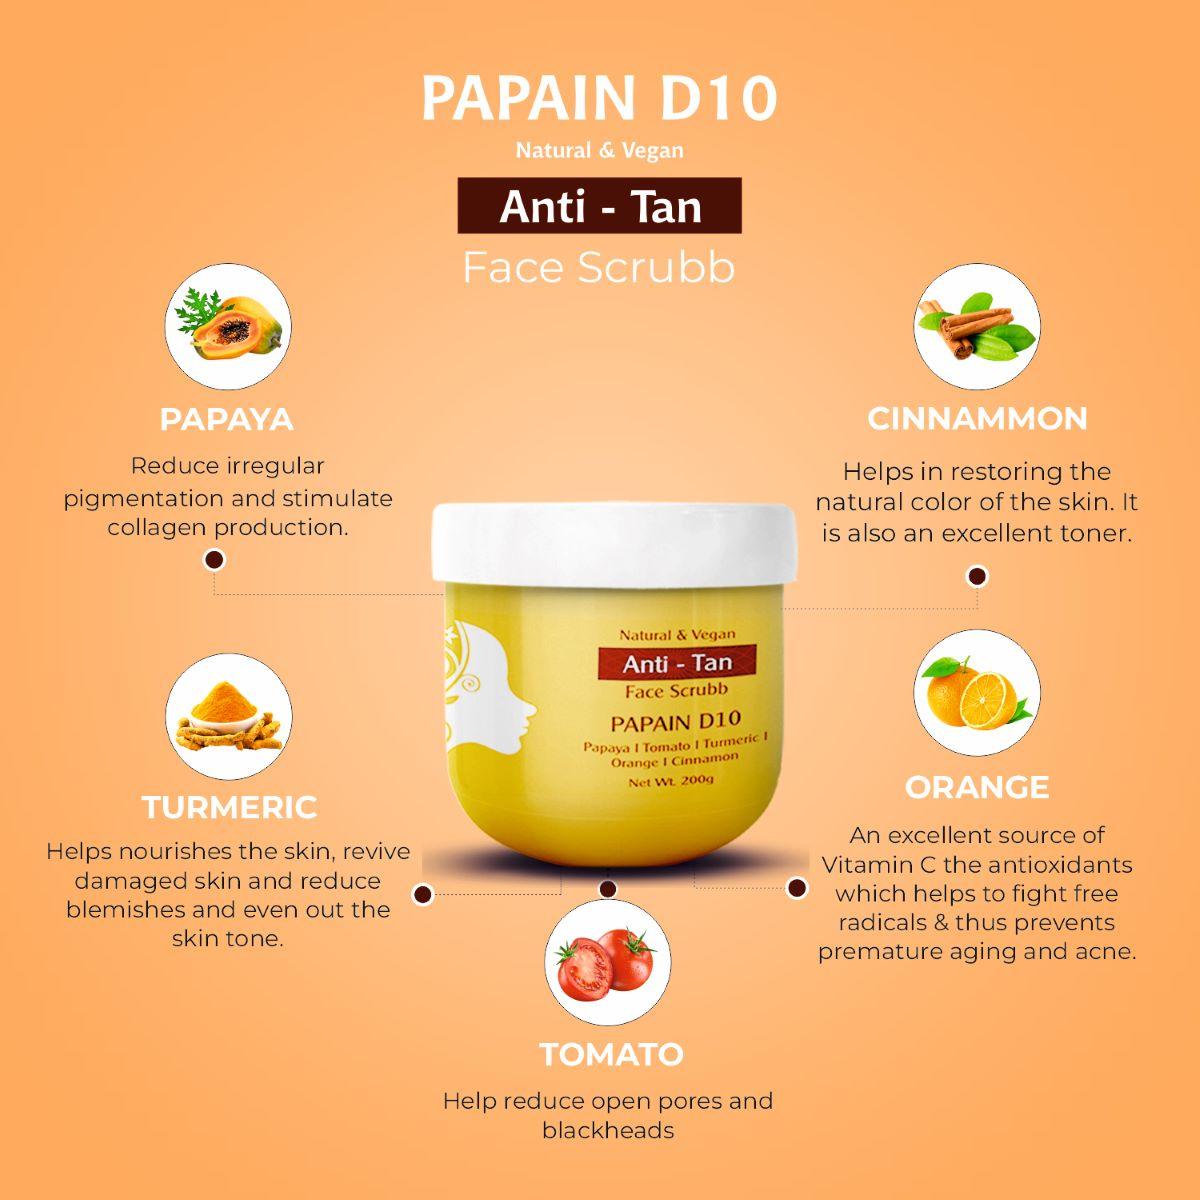 Natural Papain D10 Face Scrub | Reduces Tan | Improves Tone & Texture | Remove Dead Skin Cells | Vegan | Ayurvedic | All Skin Types (200 gm) - passionindulge